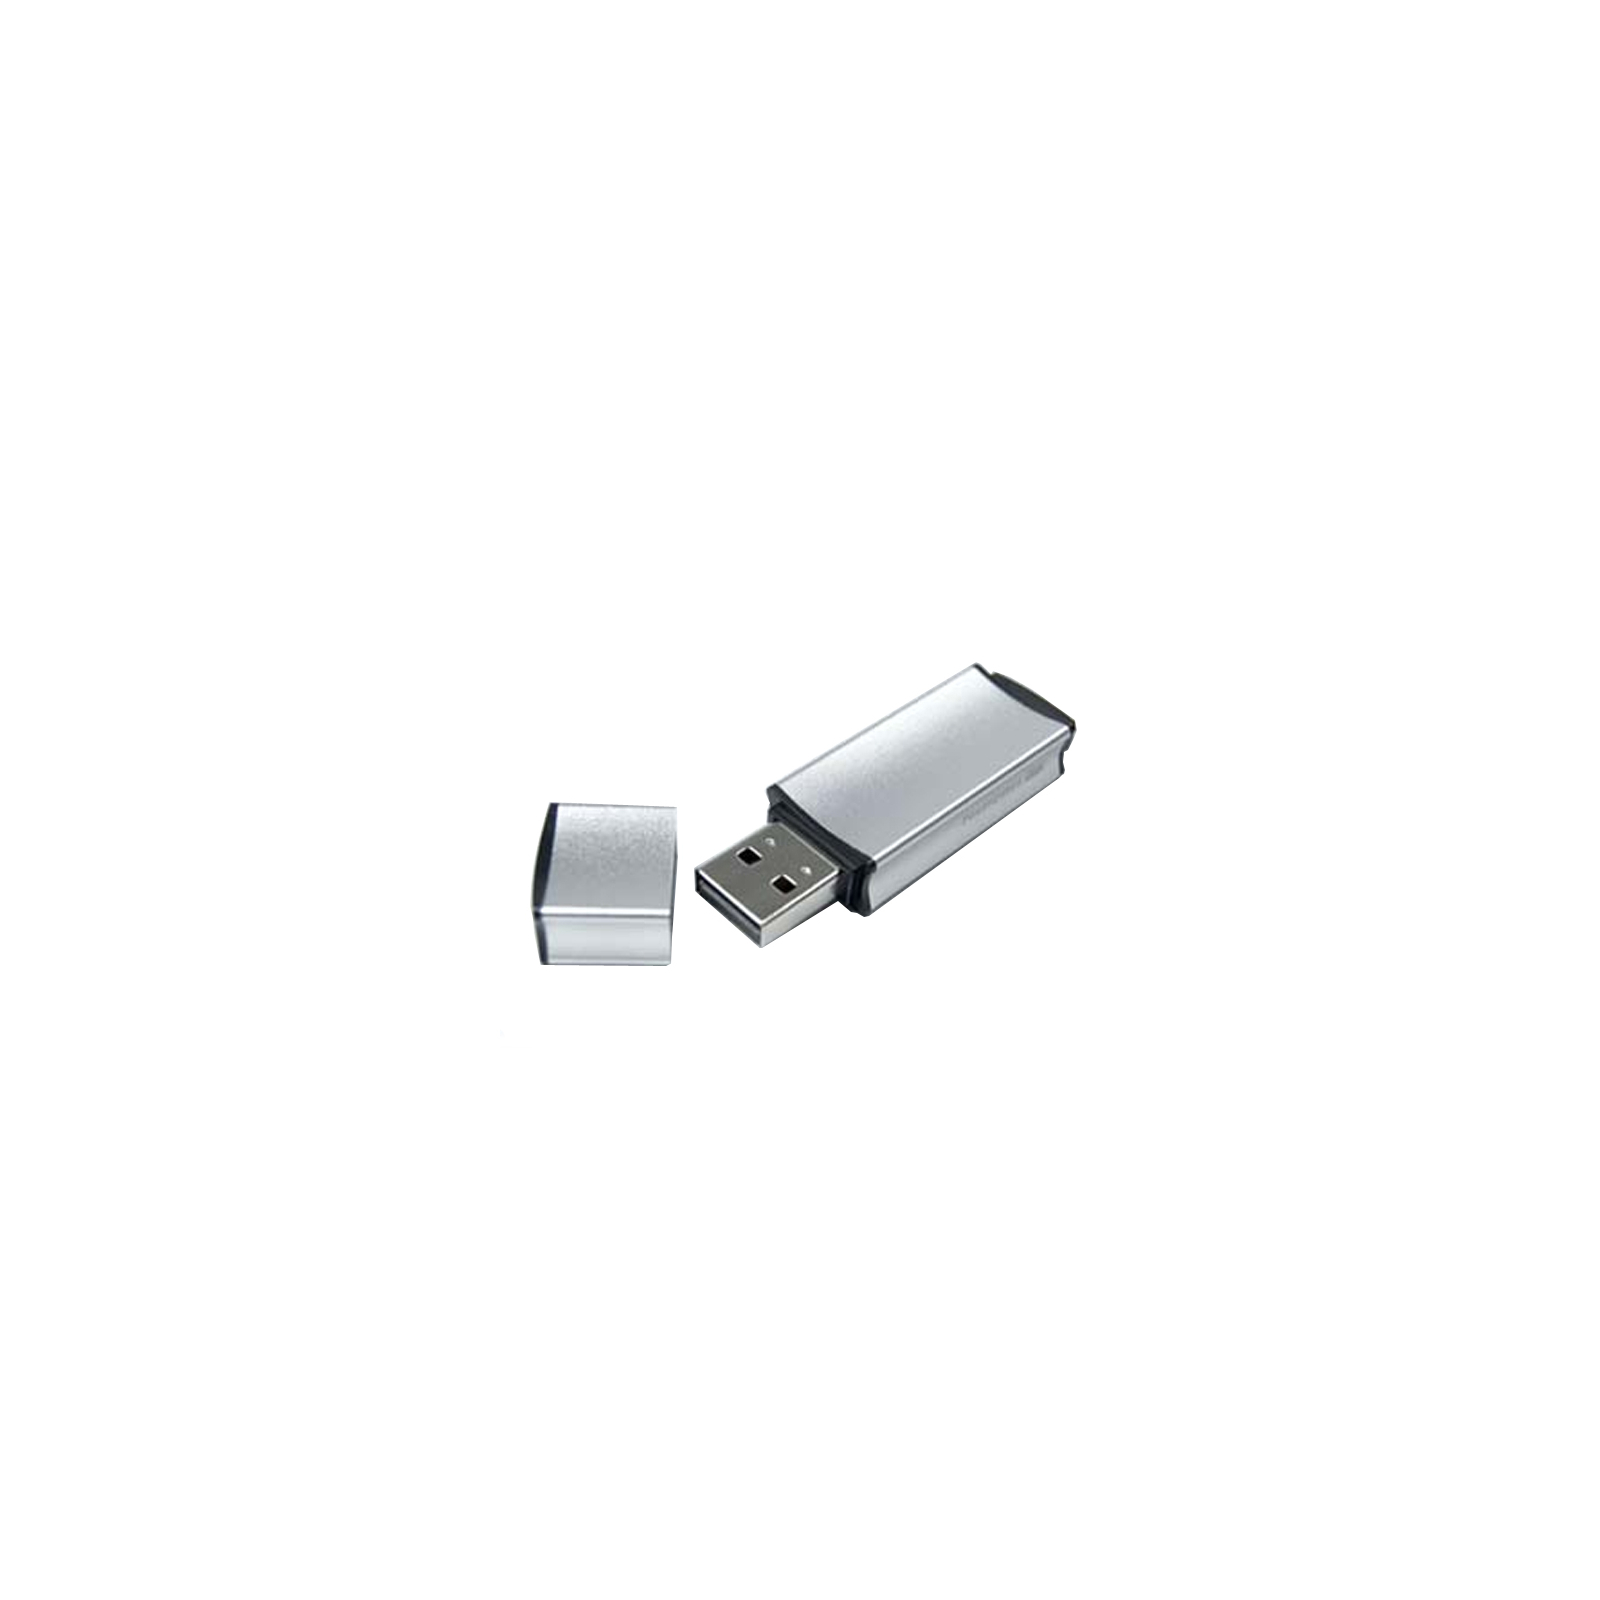 USB флеш накопитель Goodram 16Gb Edge SILVER bulk USB 2.0 (PD16GH2GREGSB)